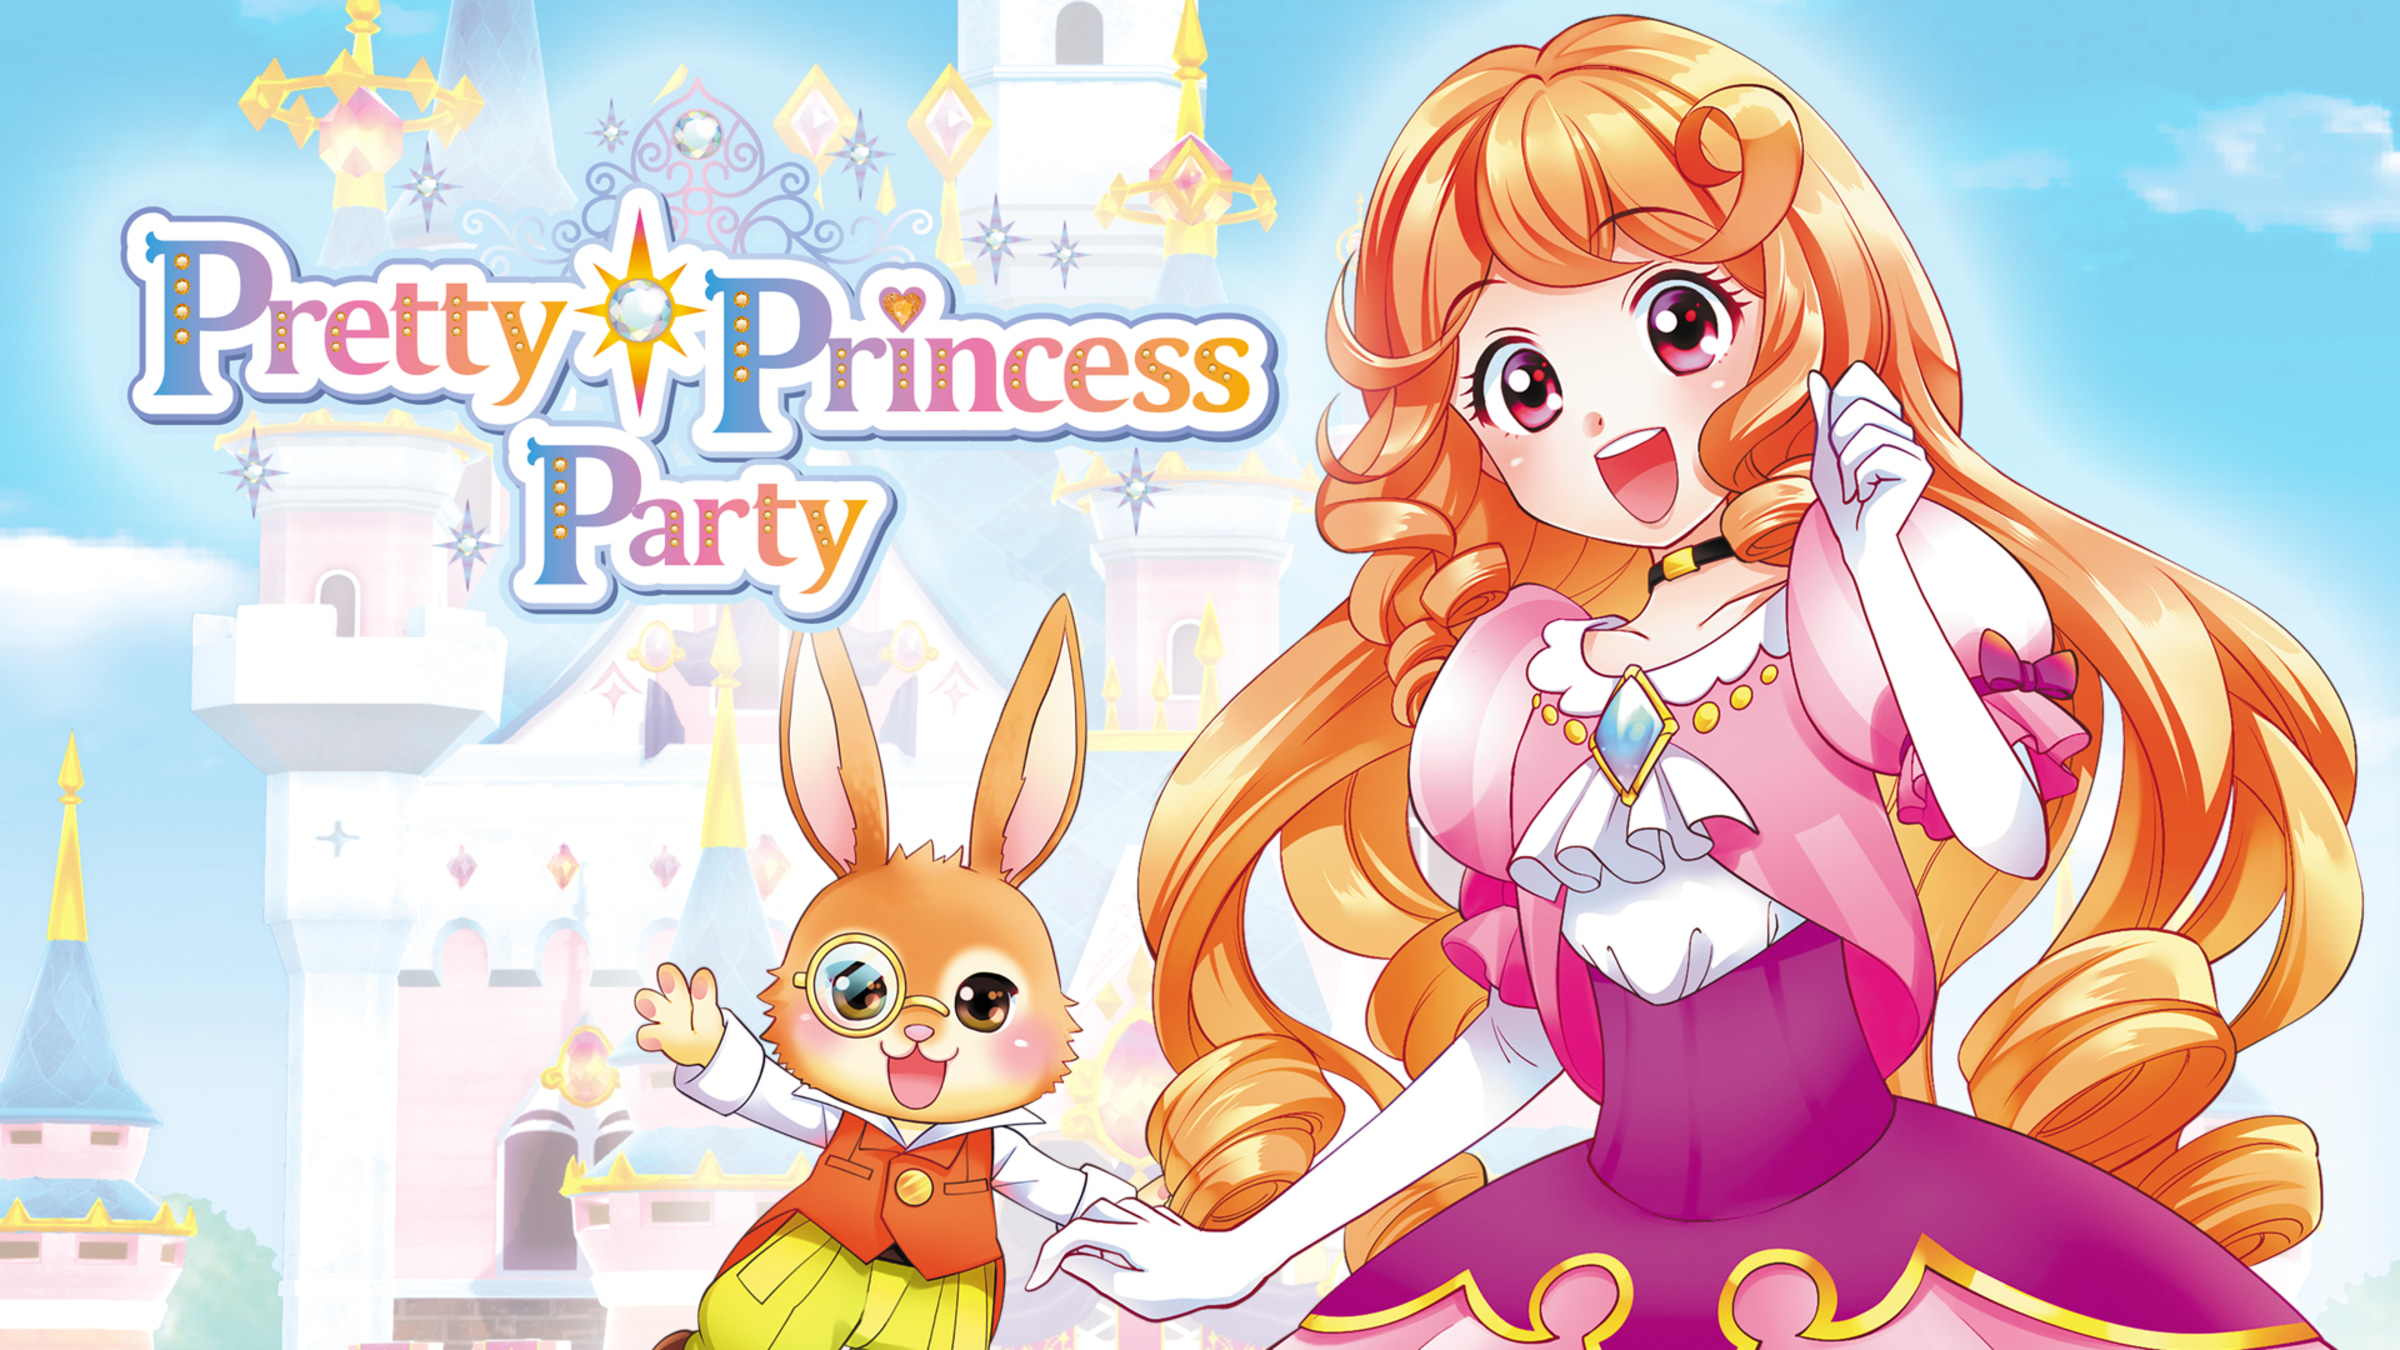 PRINCESS GAMES 👸 - Play Online Games!